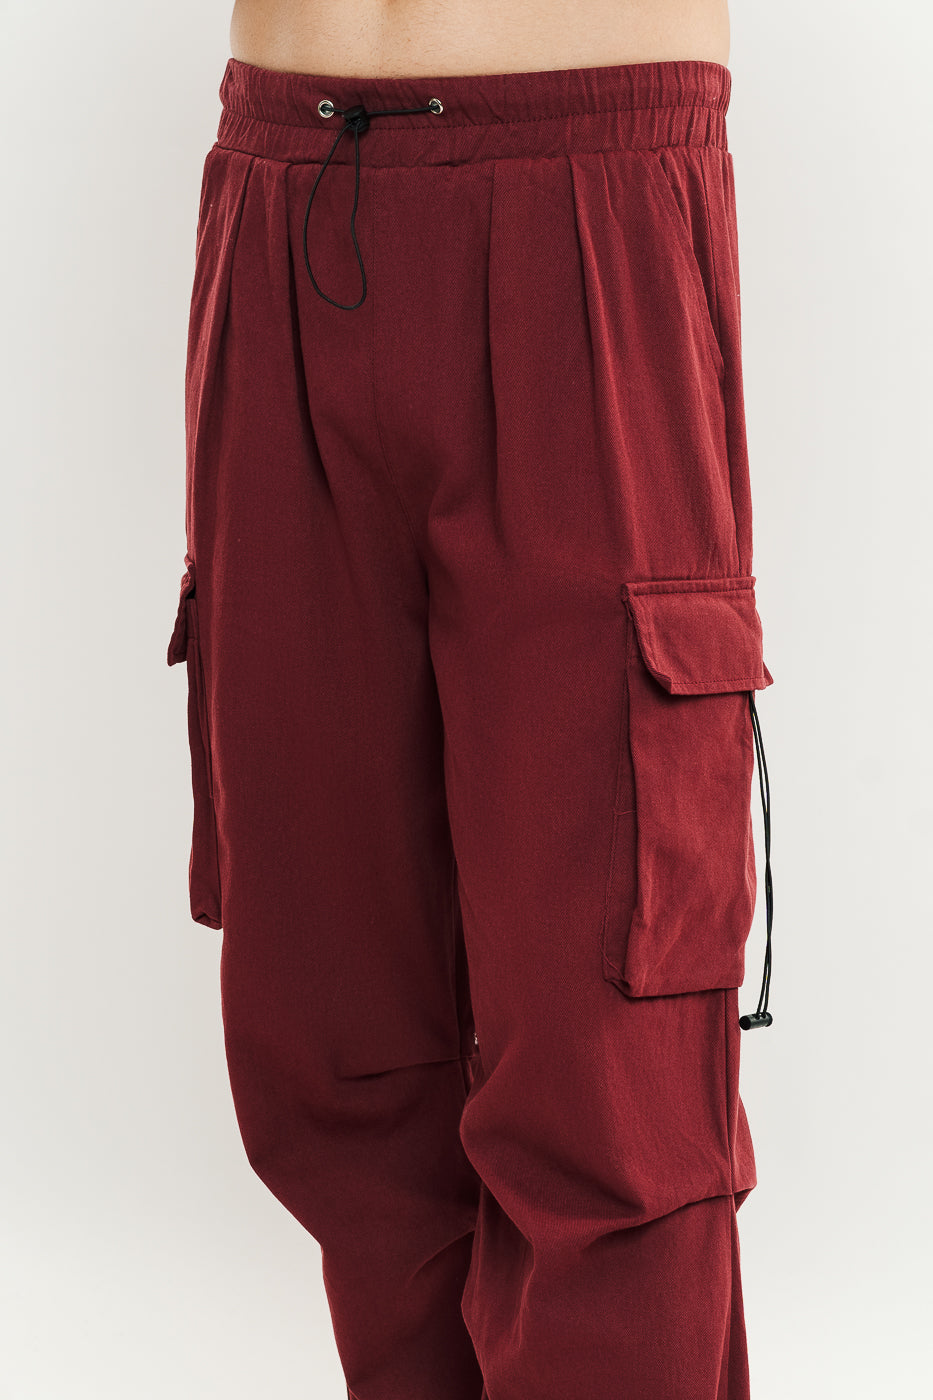 Athleta Solid Maroon Burgundy Cargo Pants Size 2 (Petite) - 66% off |  ThredUp